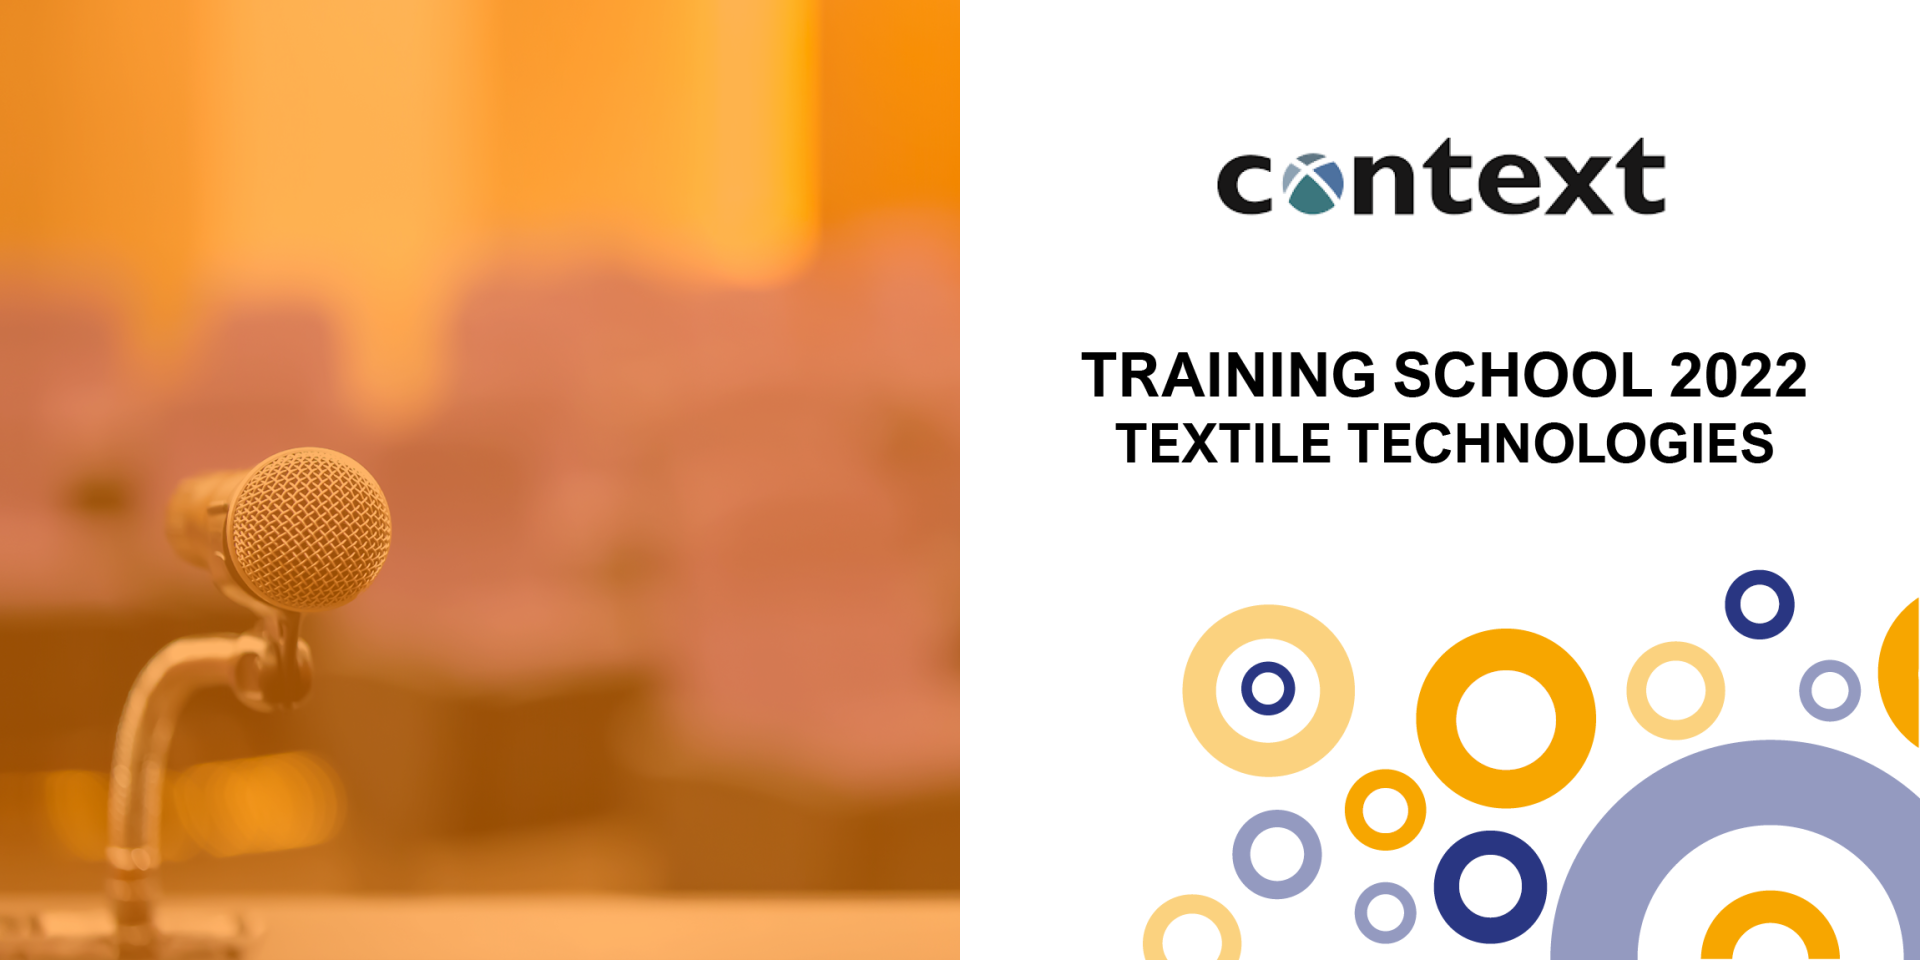 Eu-alliance_Context-training-school-textile-technologies